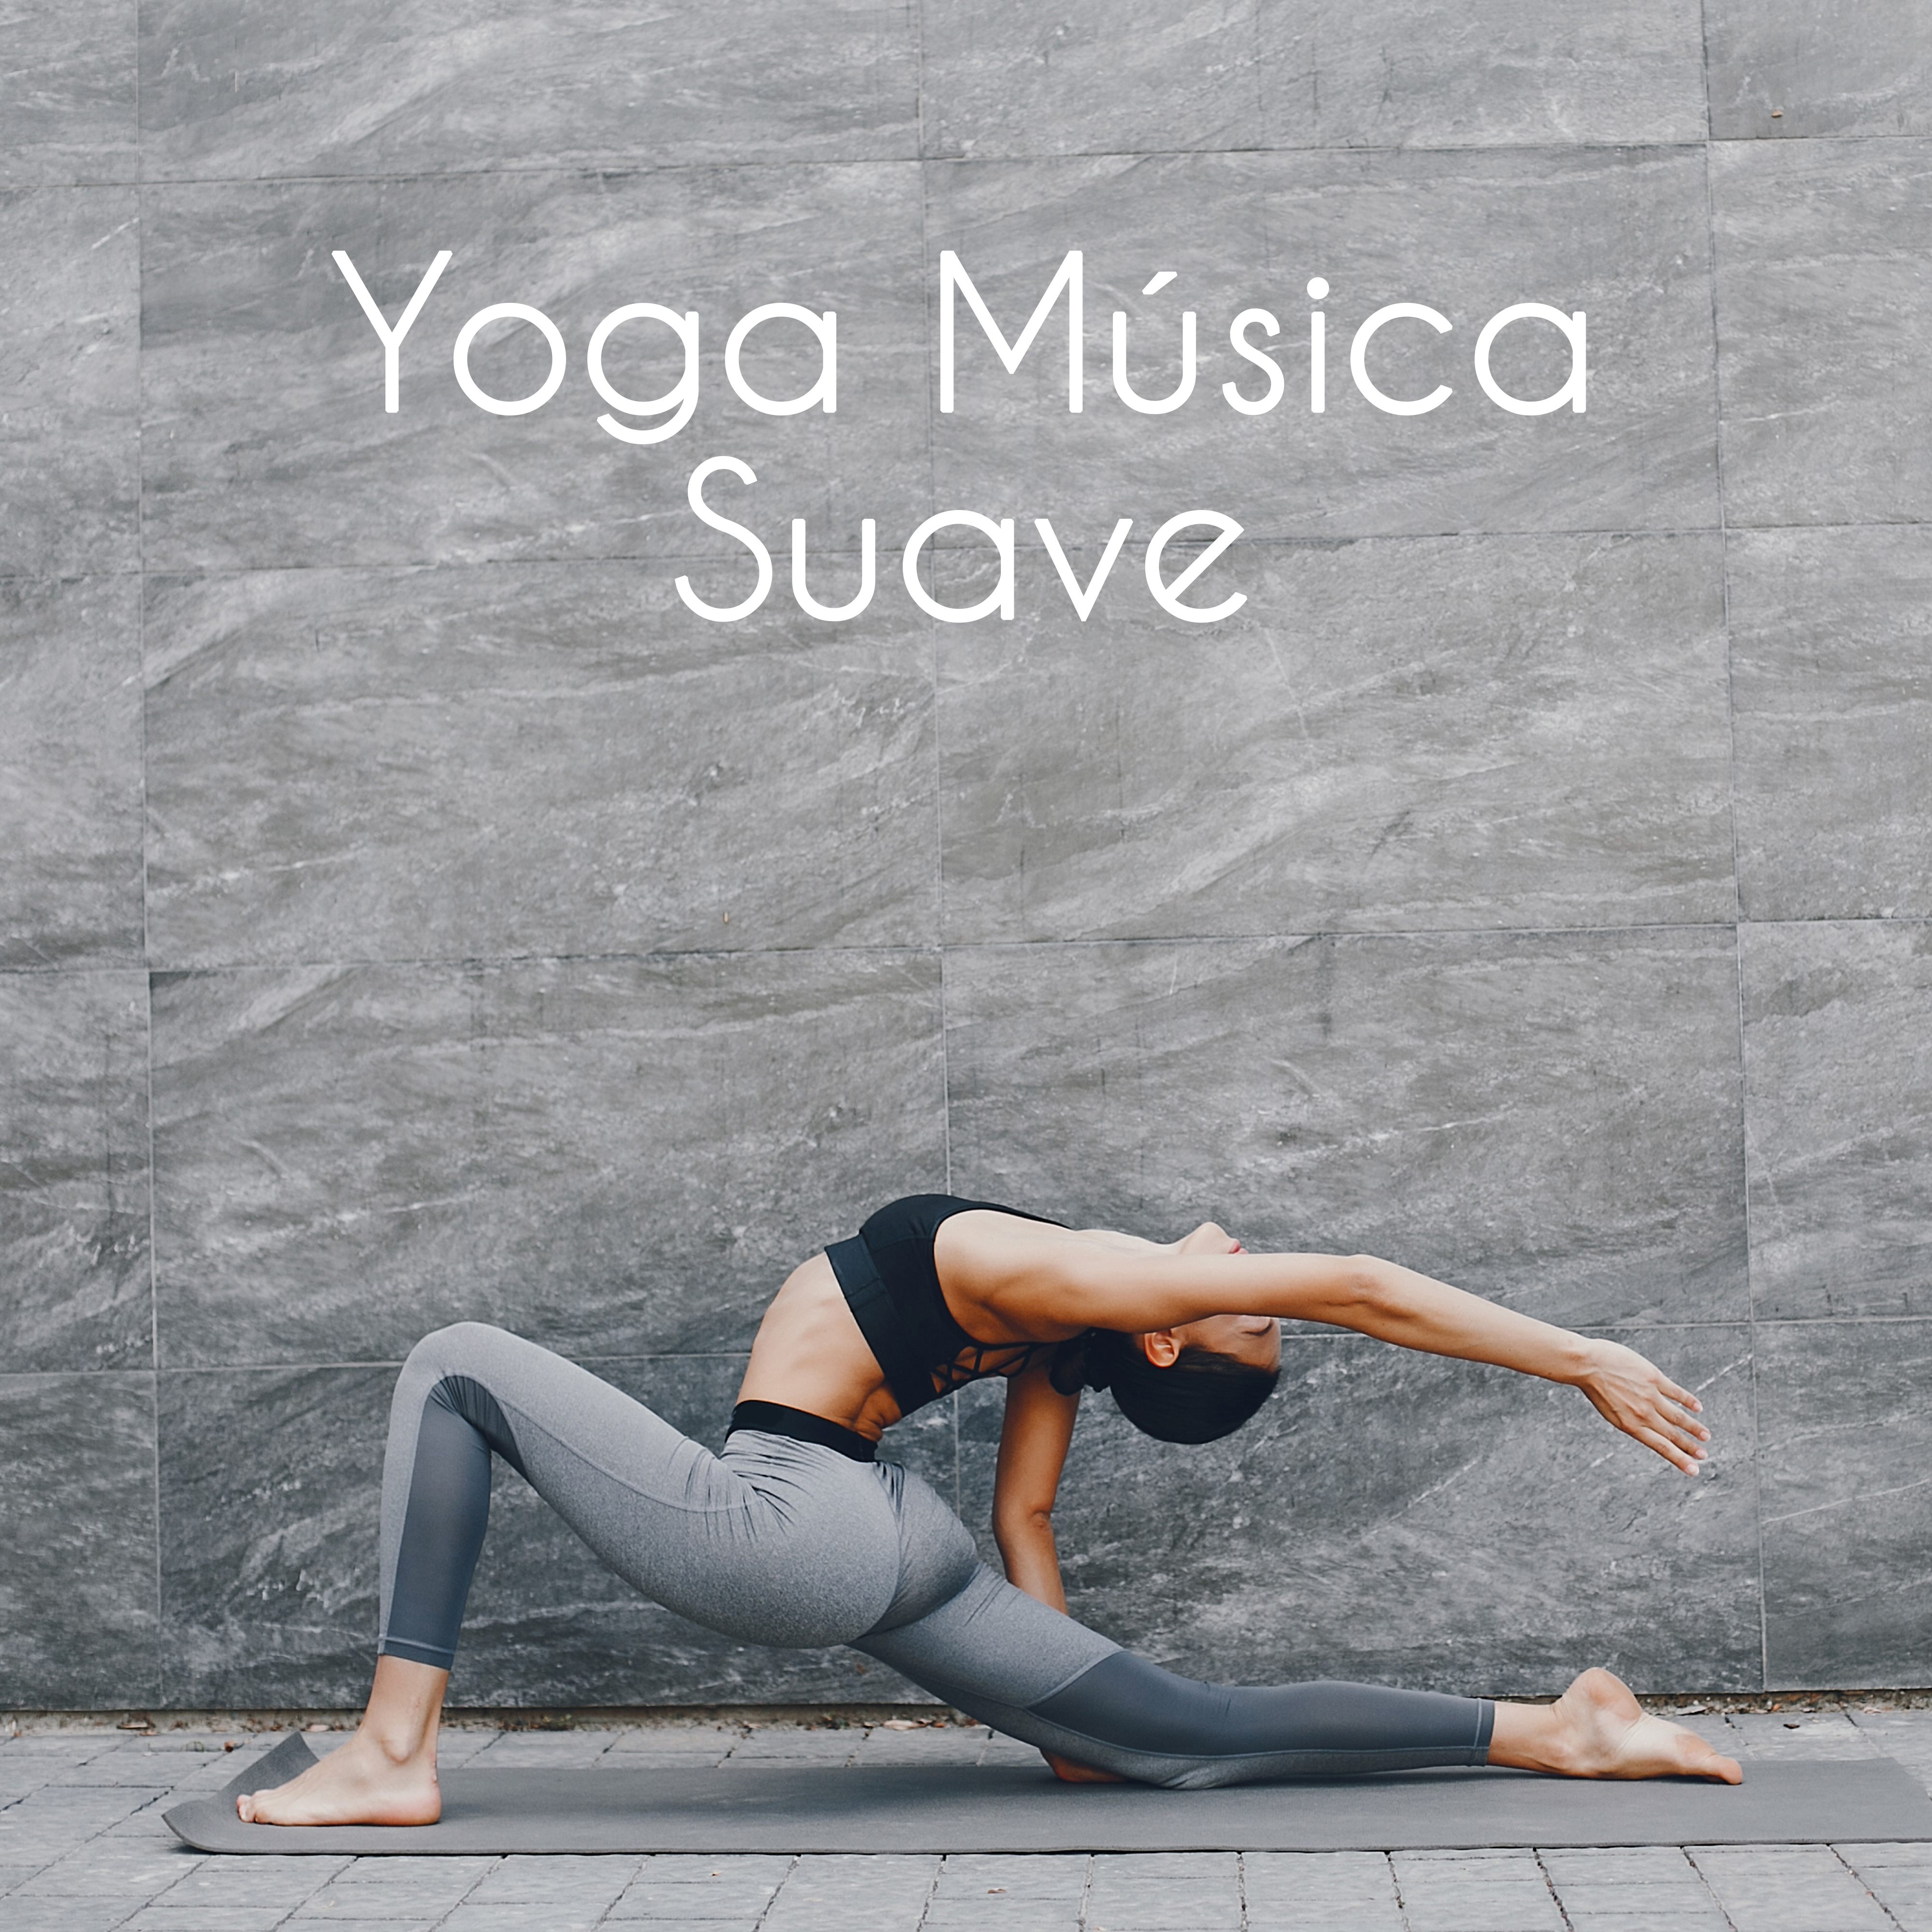 Yoga Mu sica Suave